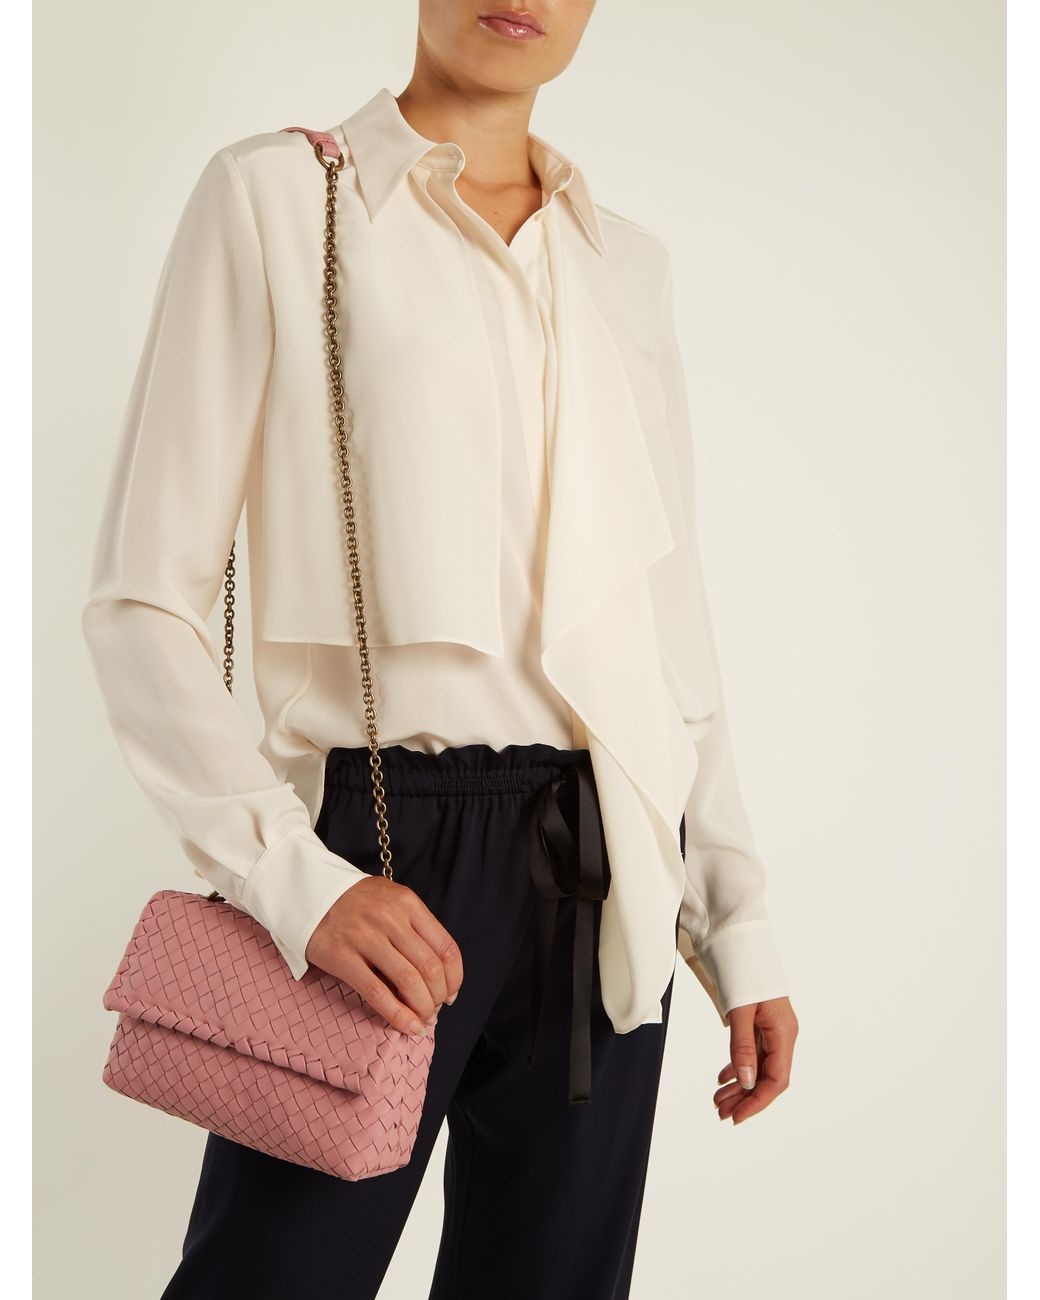 Bottega Veneta Olimpia Small Intrecciato Leather Shoulder Bag in Pink | Lyst